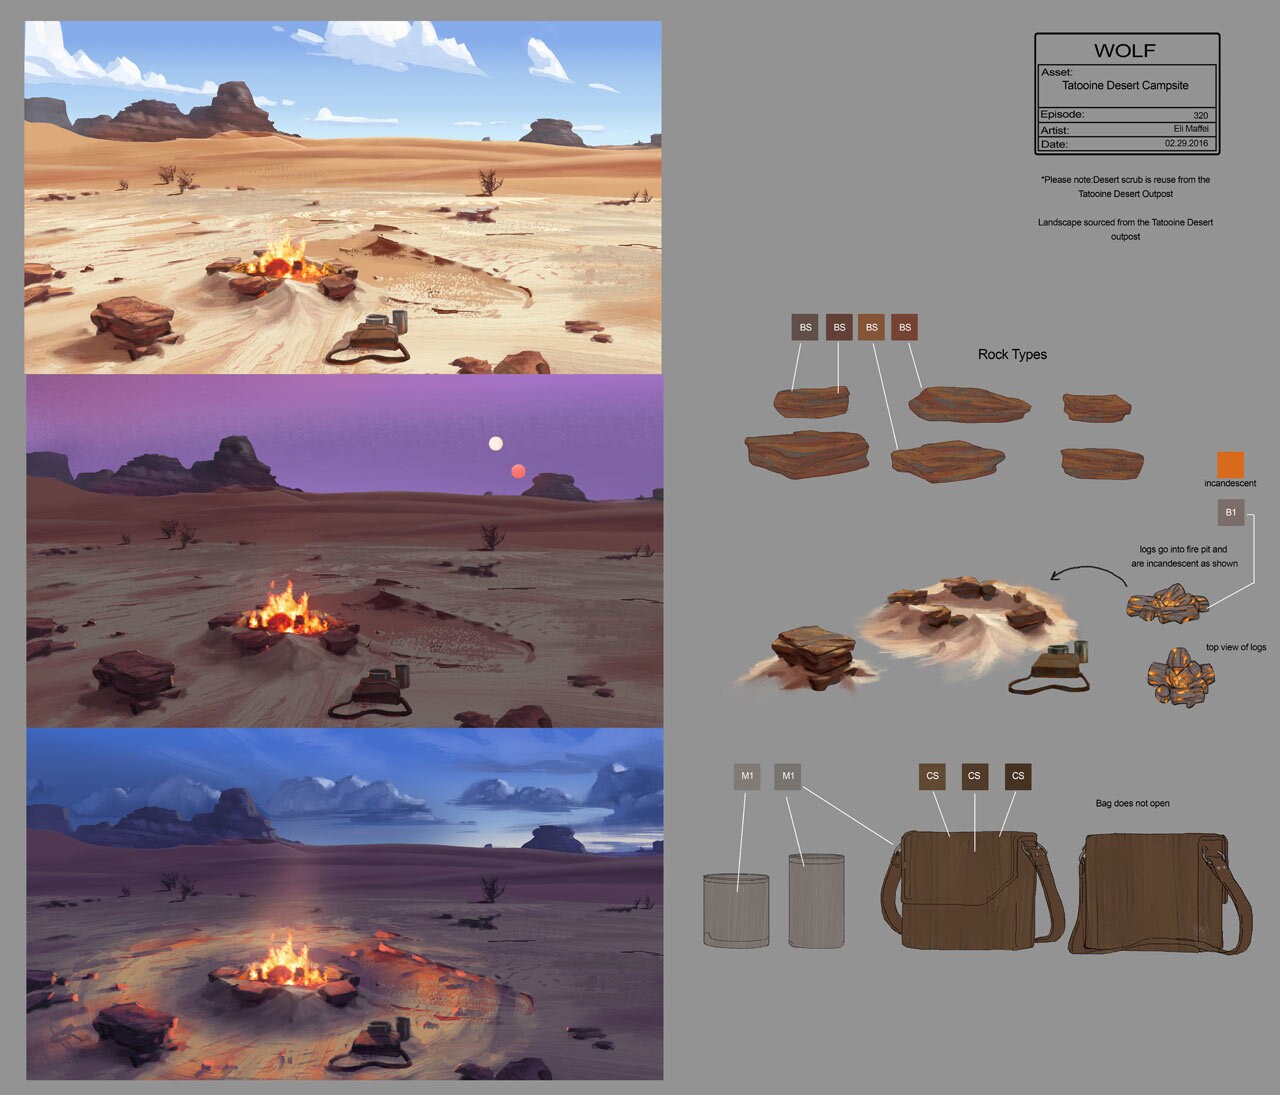 Tatooine desert campsite concept art by Eli Maffei.